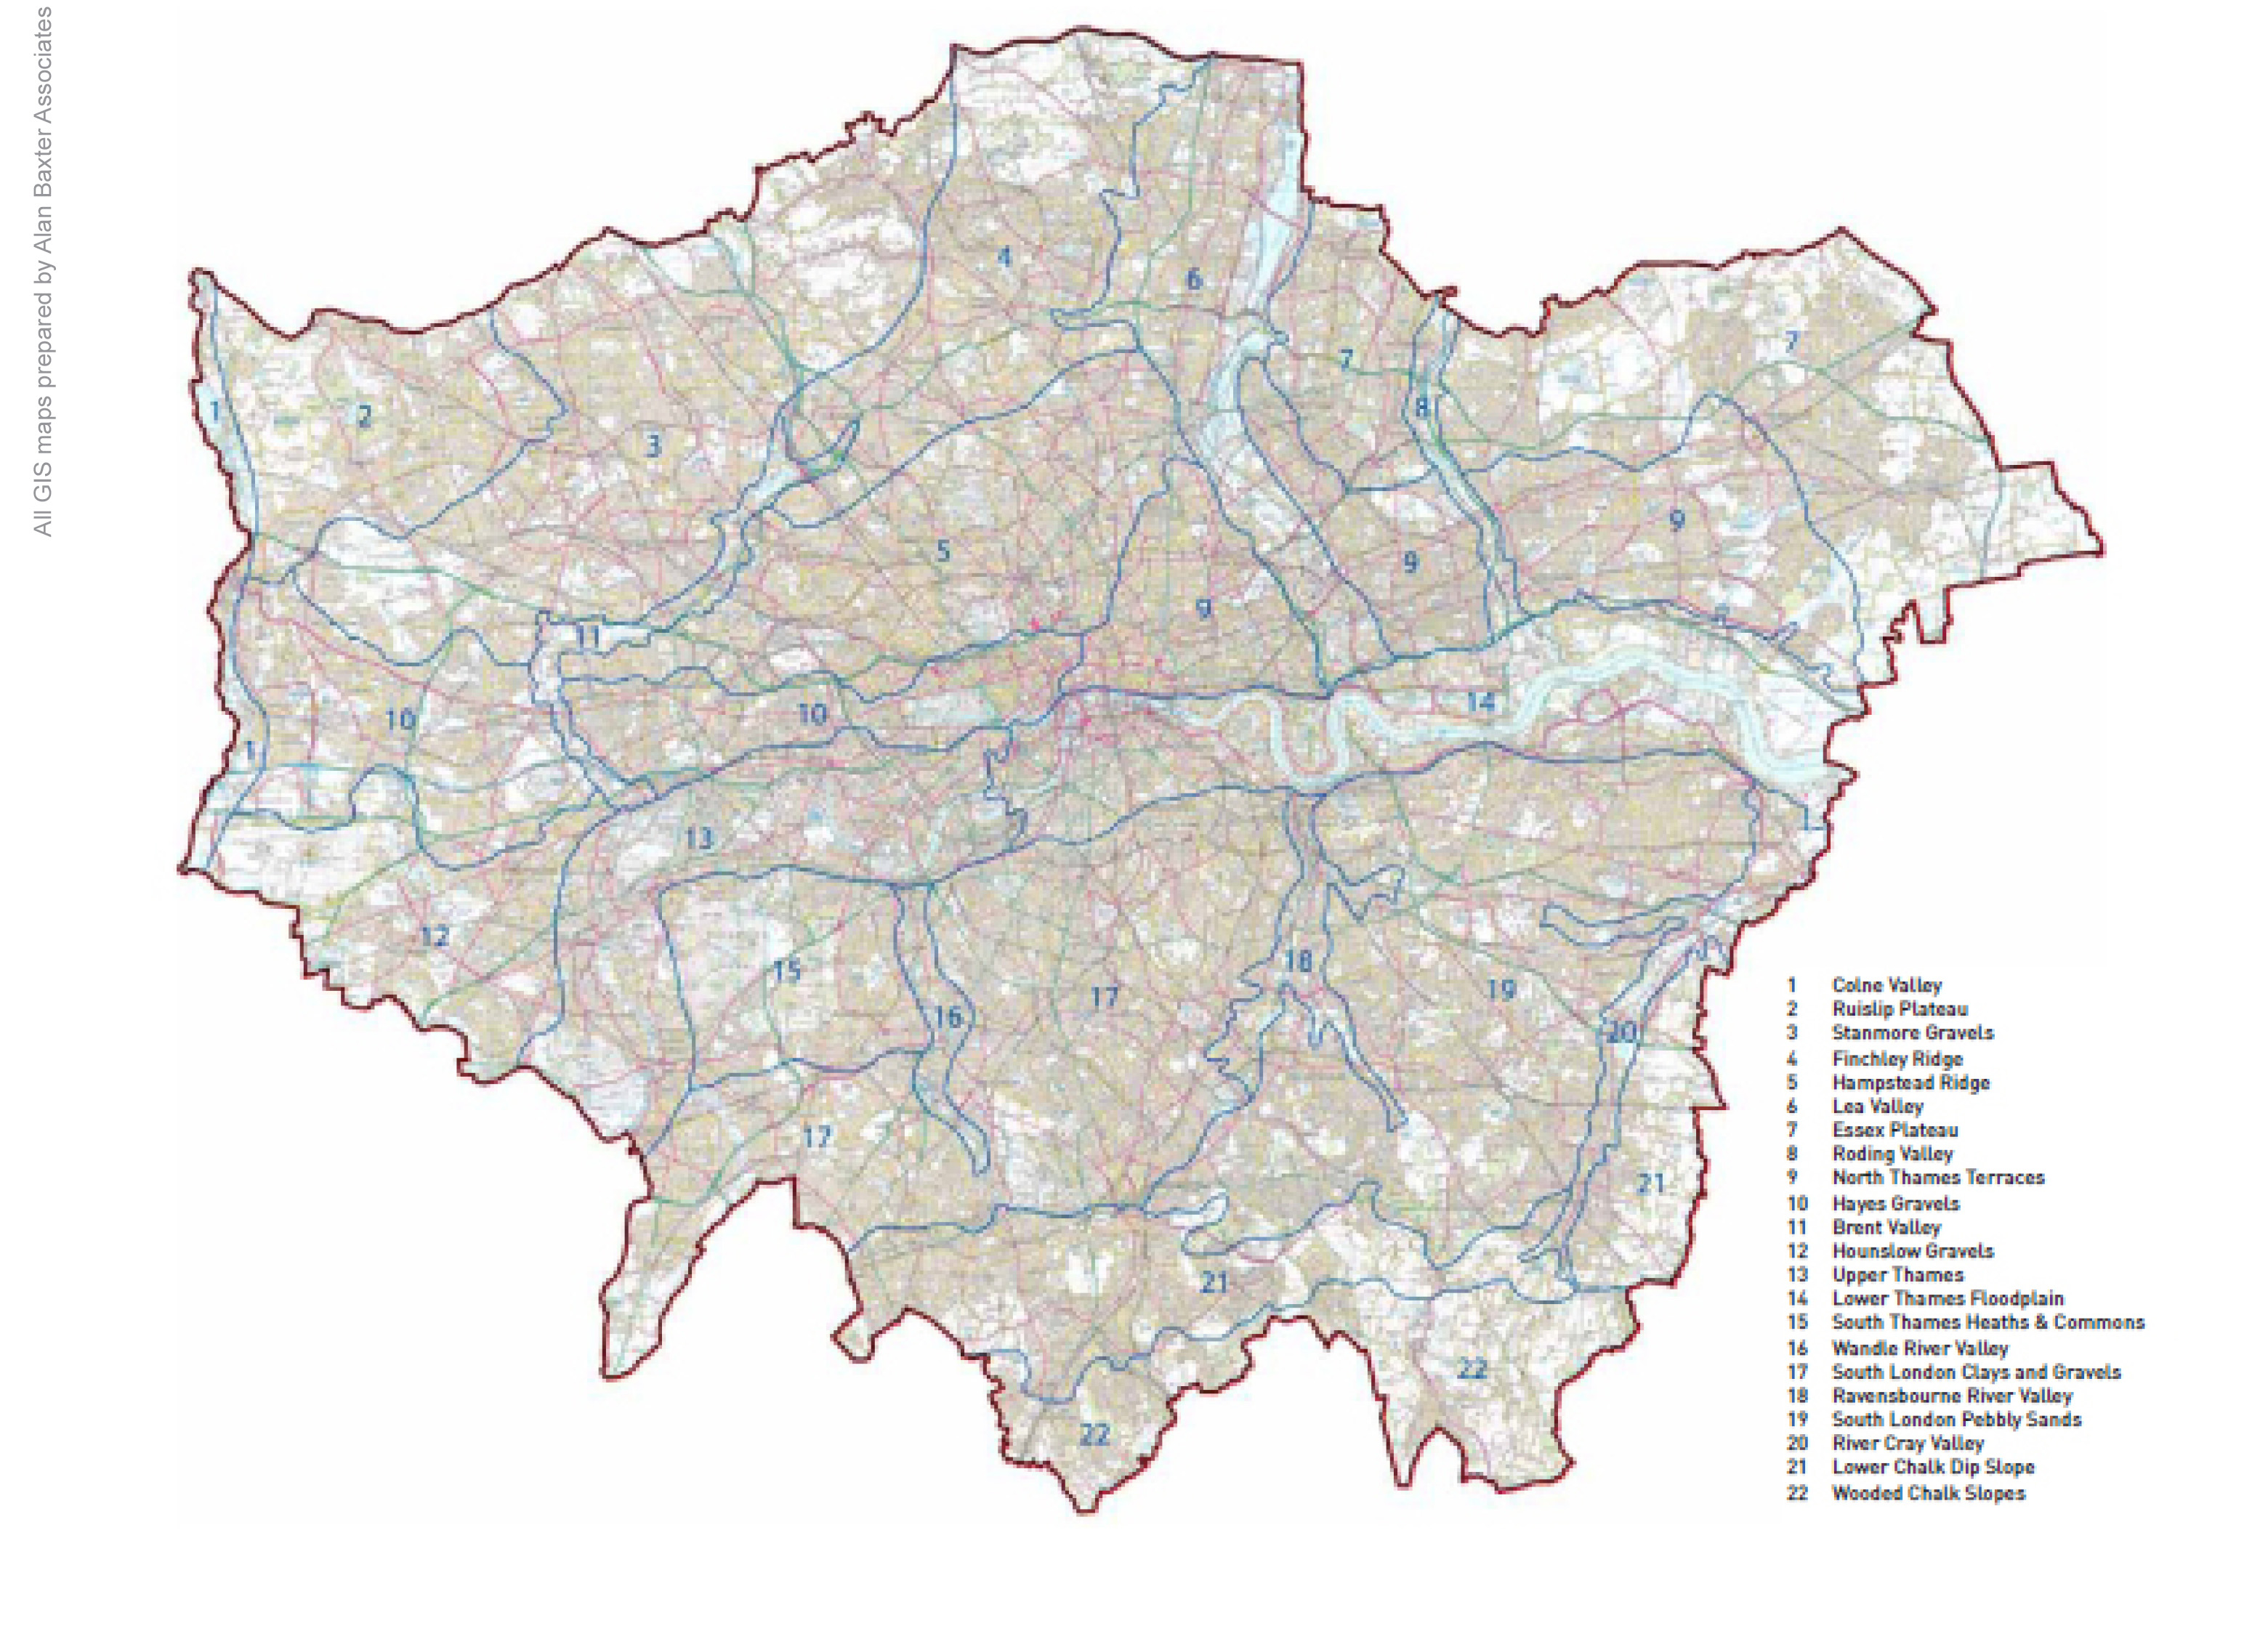 London-wide  - landscape types